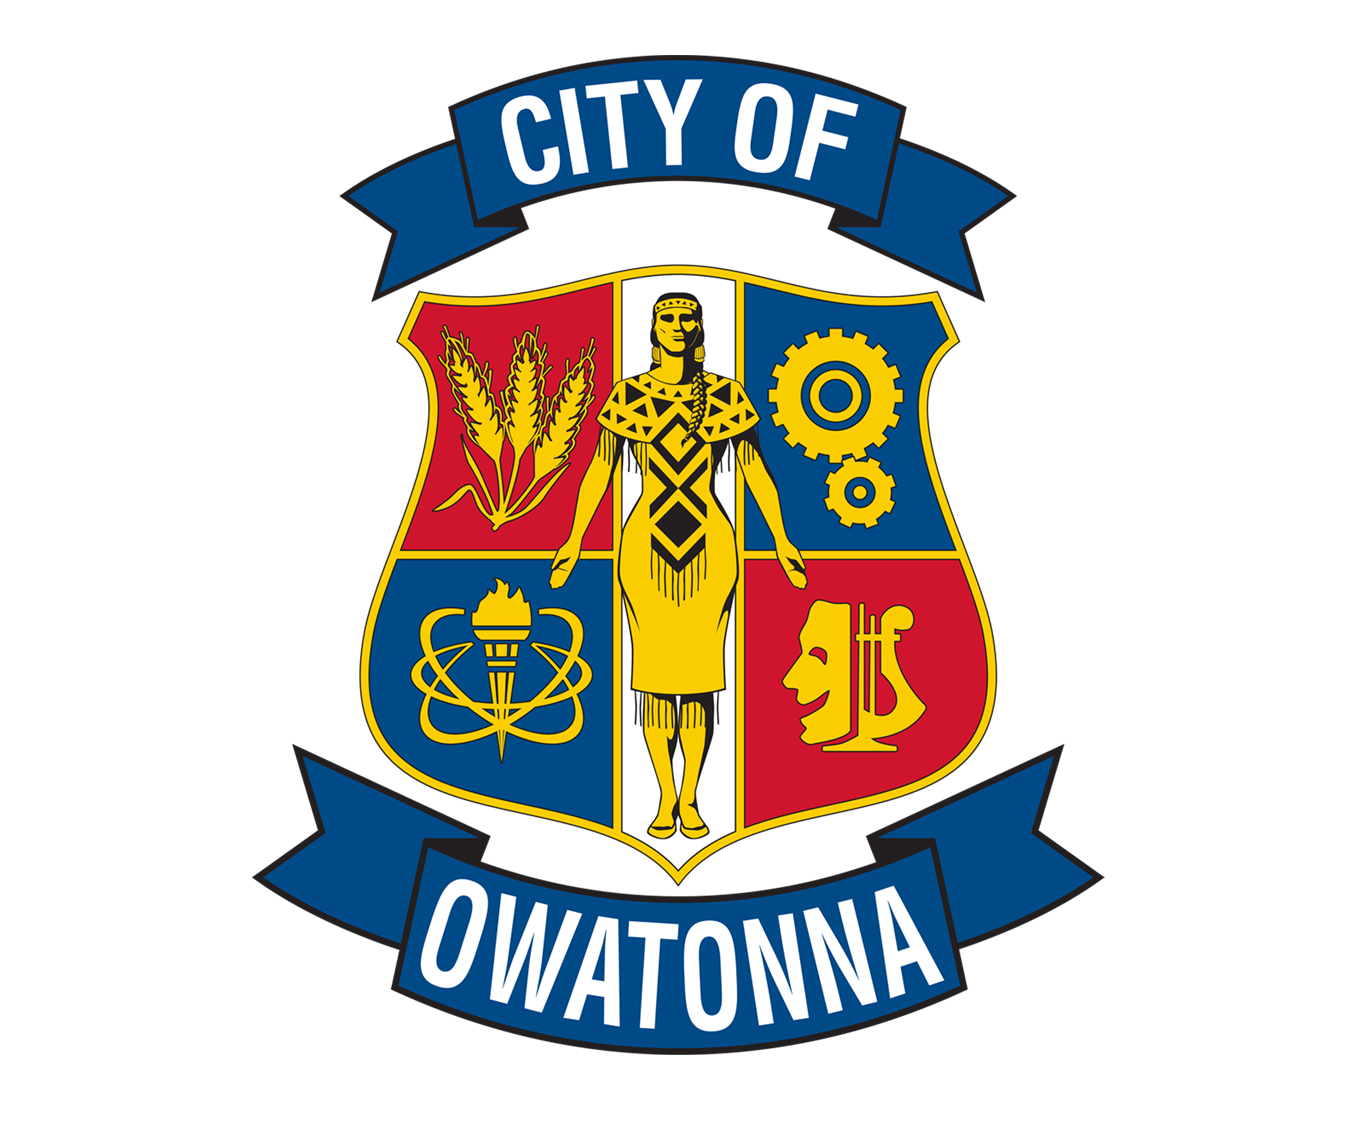 City of Owatonna logo